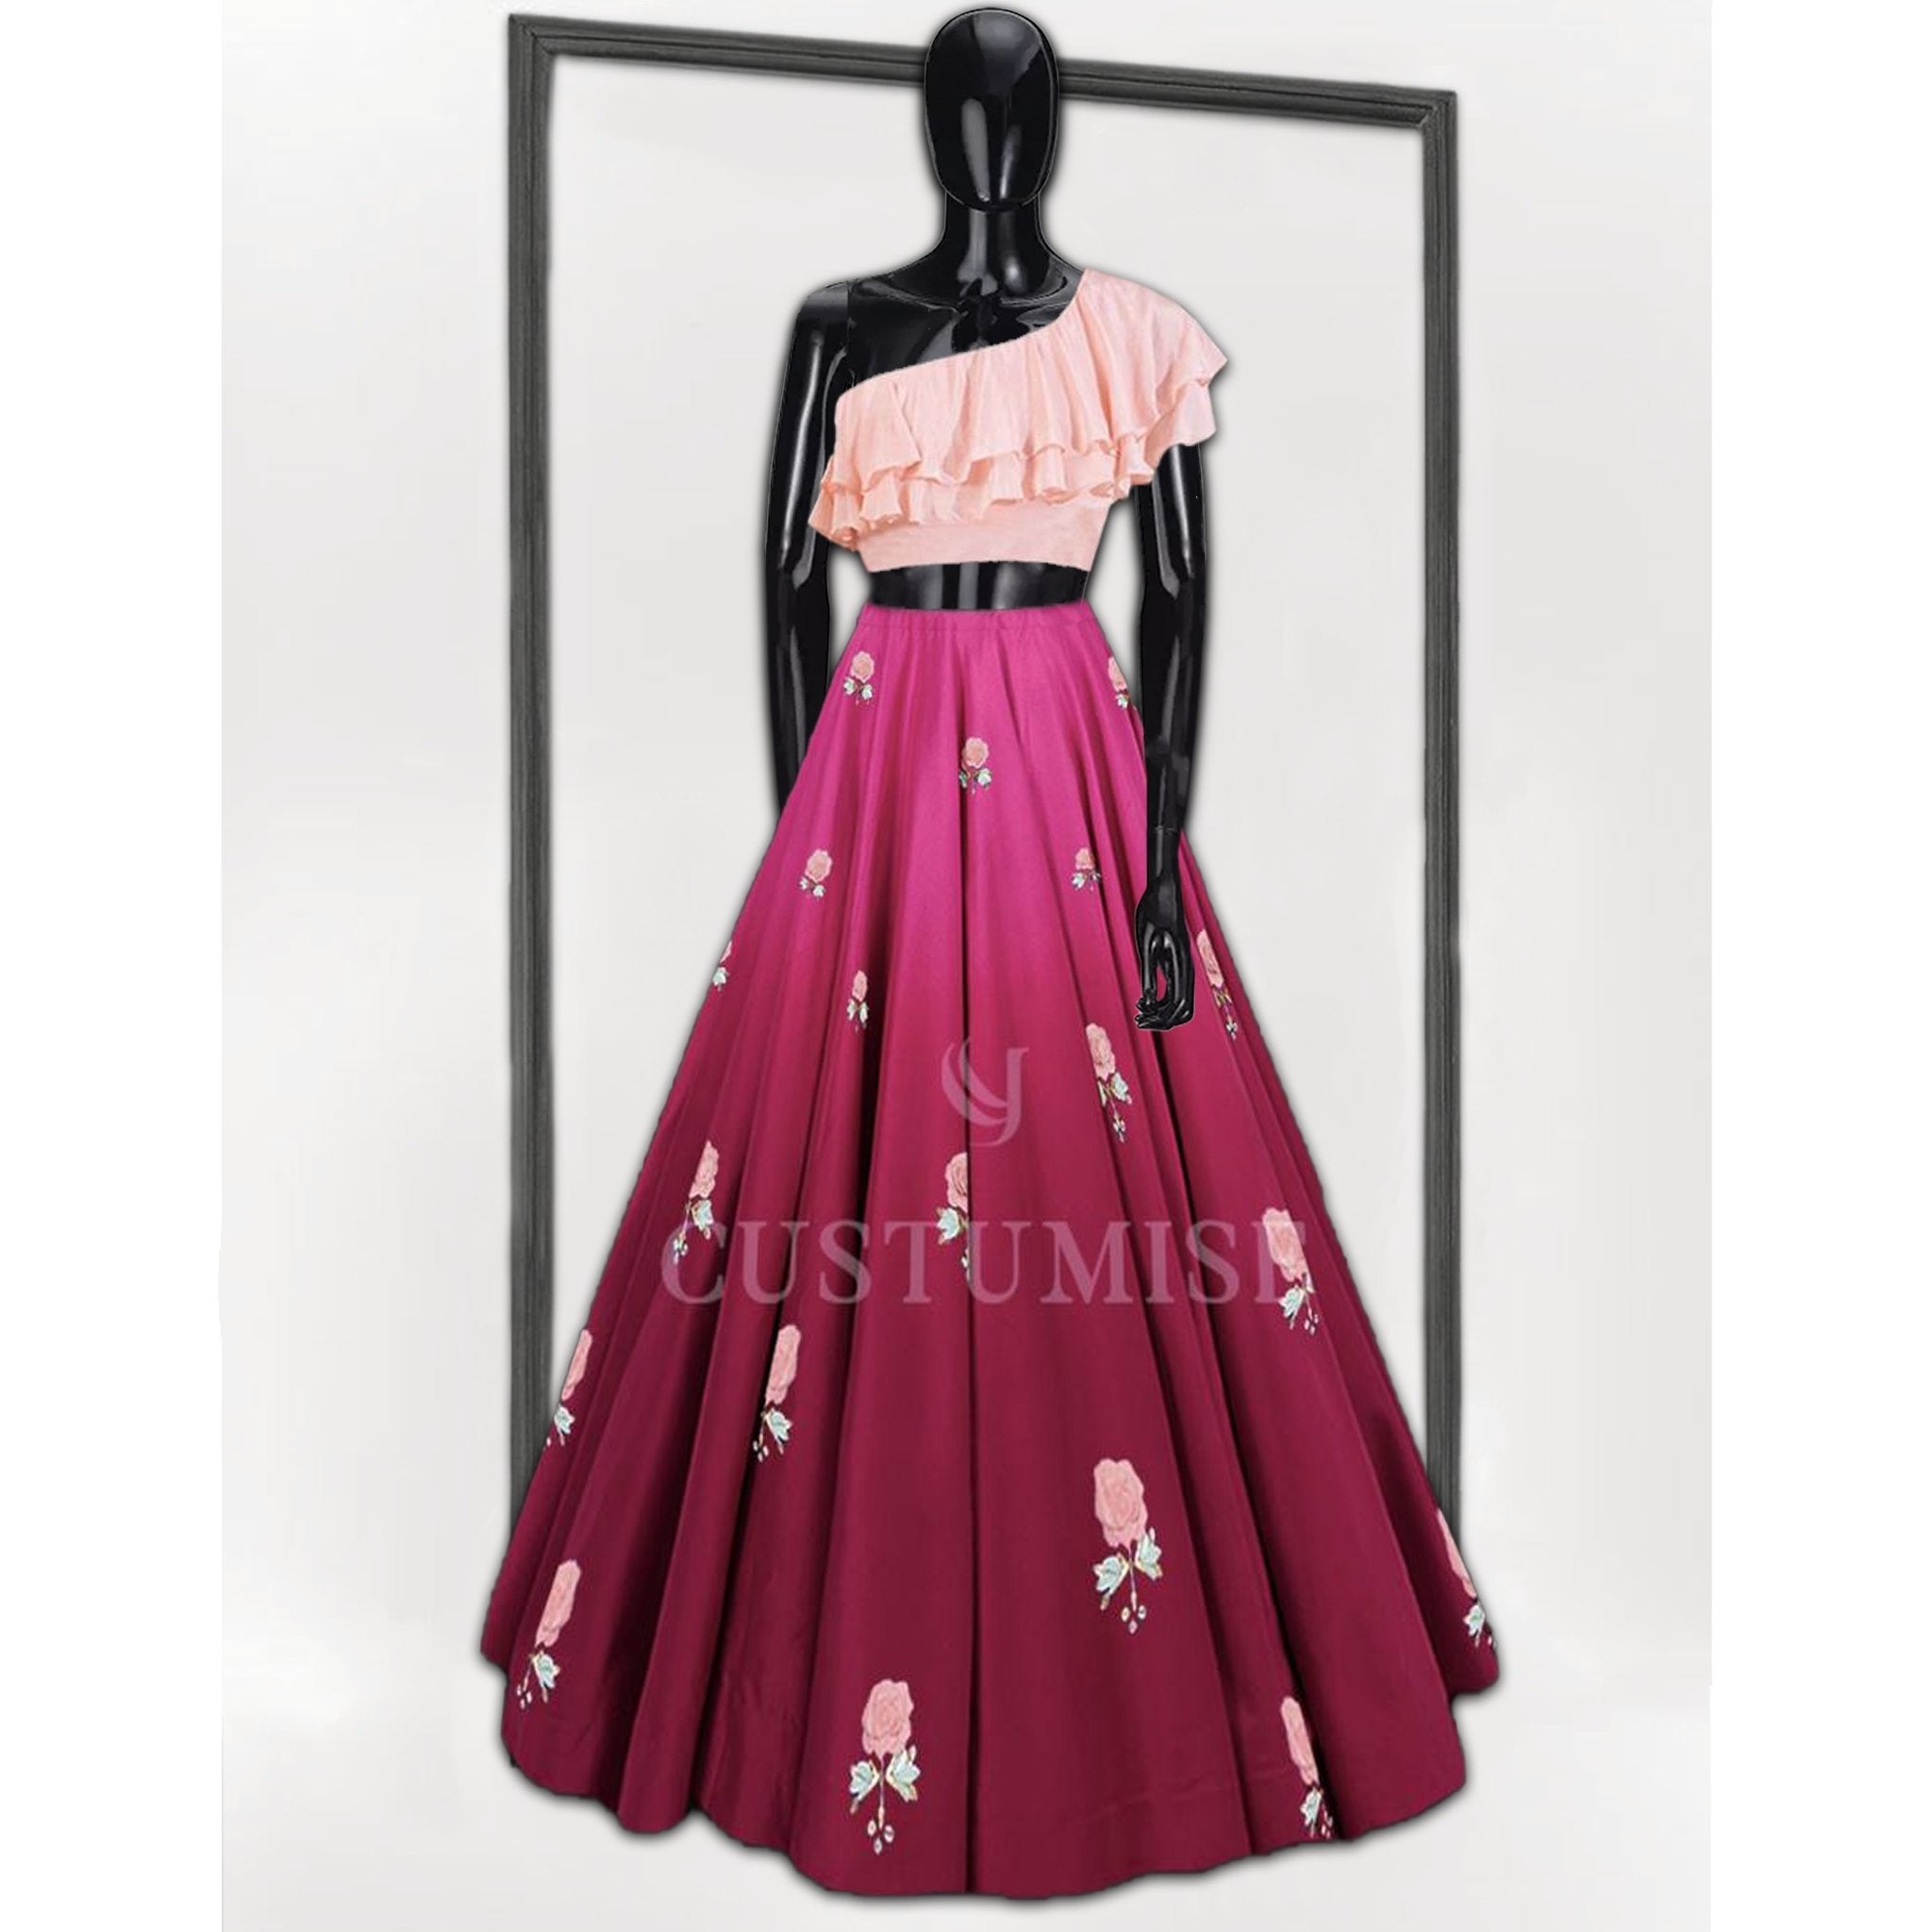 Floral Fantasy: Magenta Pink Skirt with Pastel Pink Ruffled Top - Indian Designer Bridal Wedding Outfit